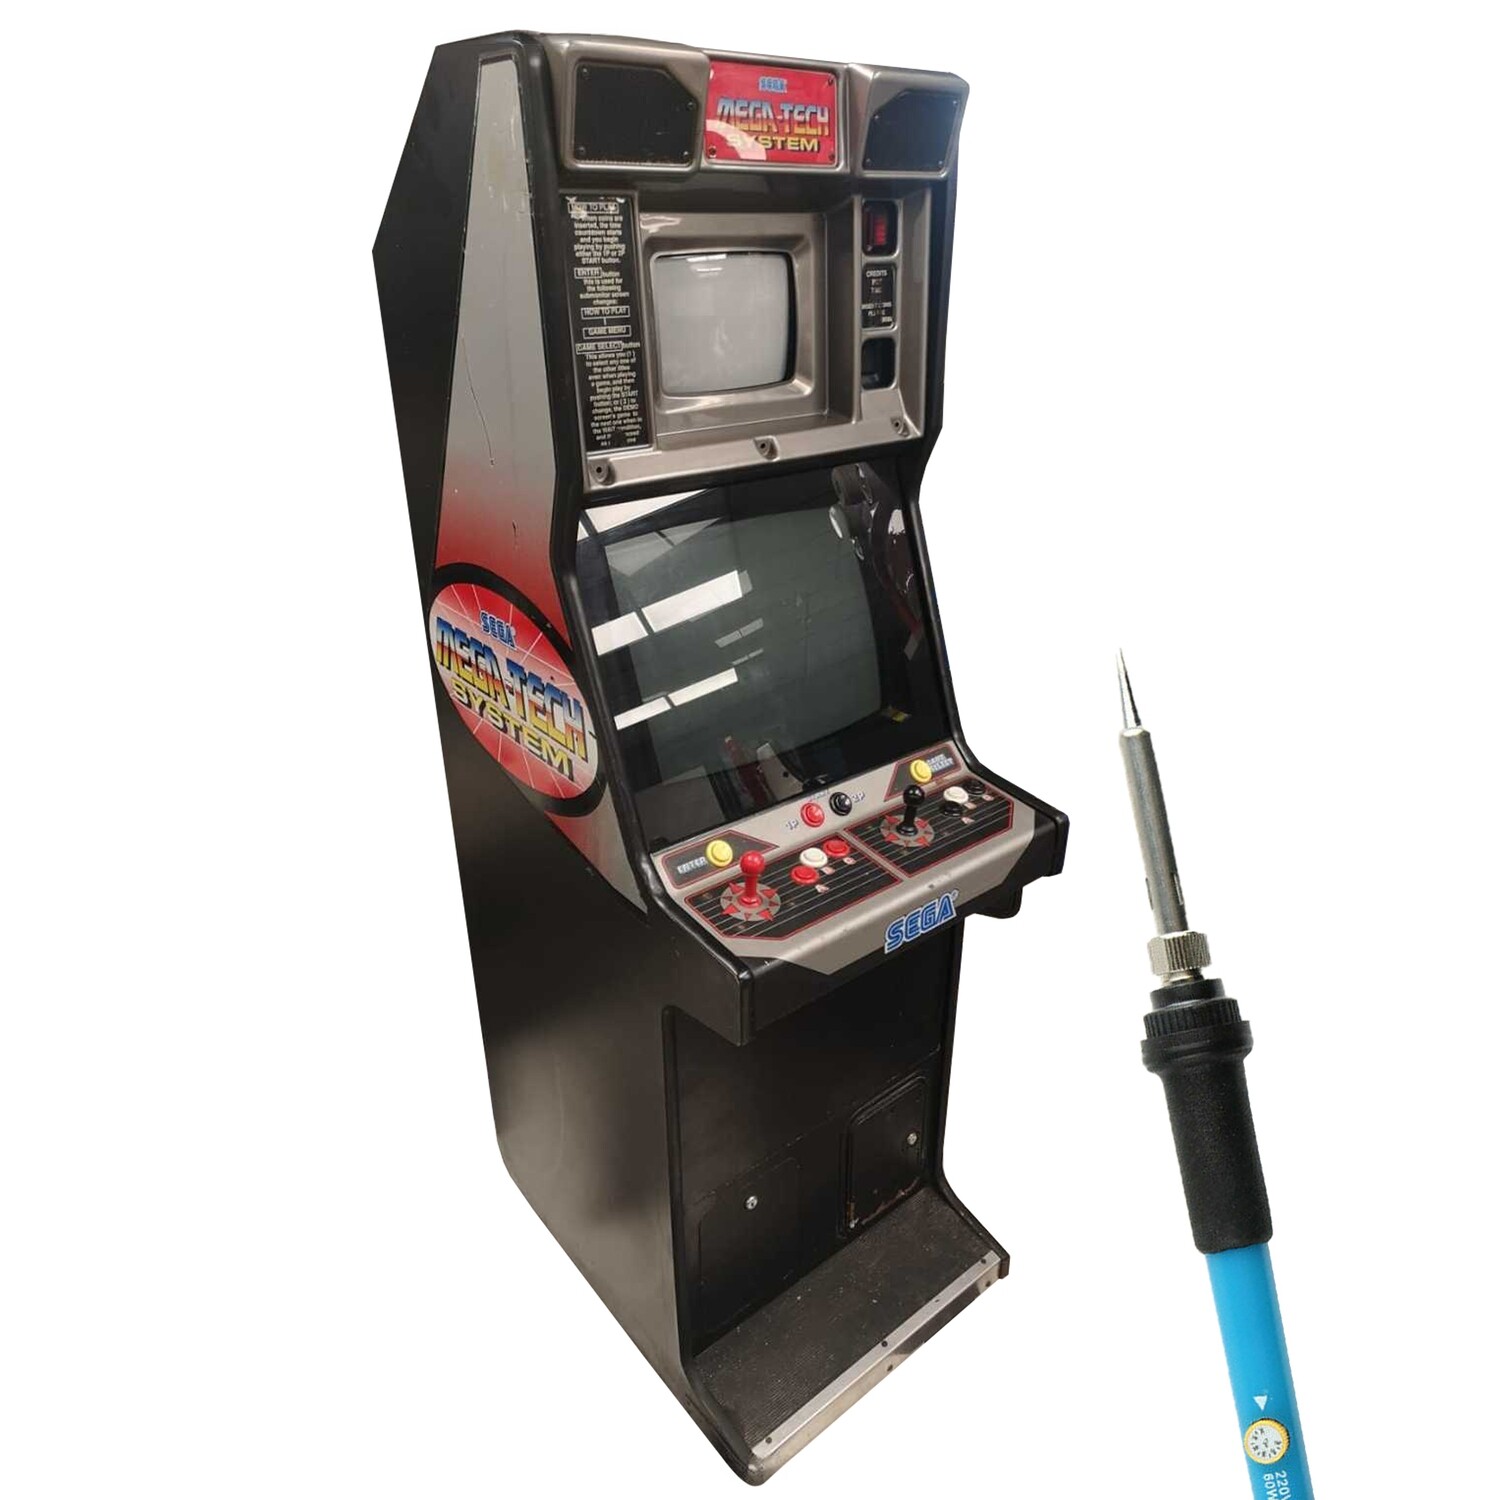 Sega Mega Tech Arcade: Repair Service